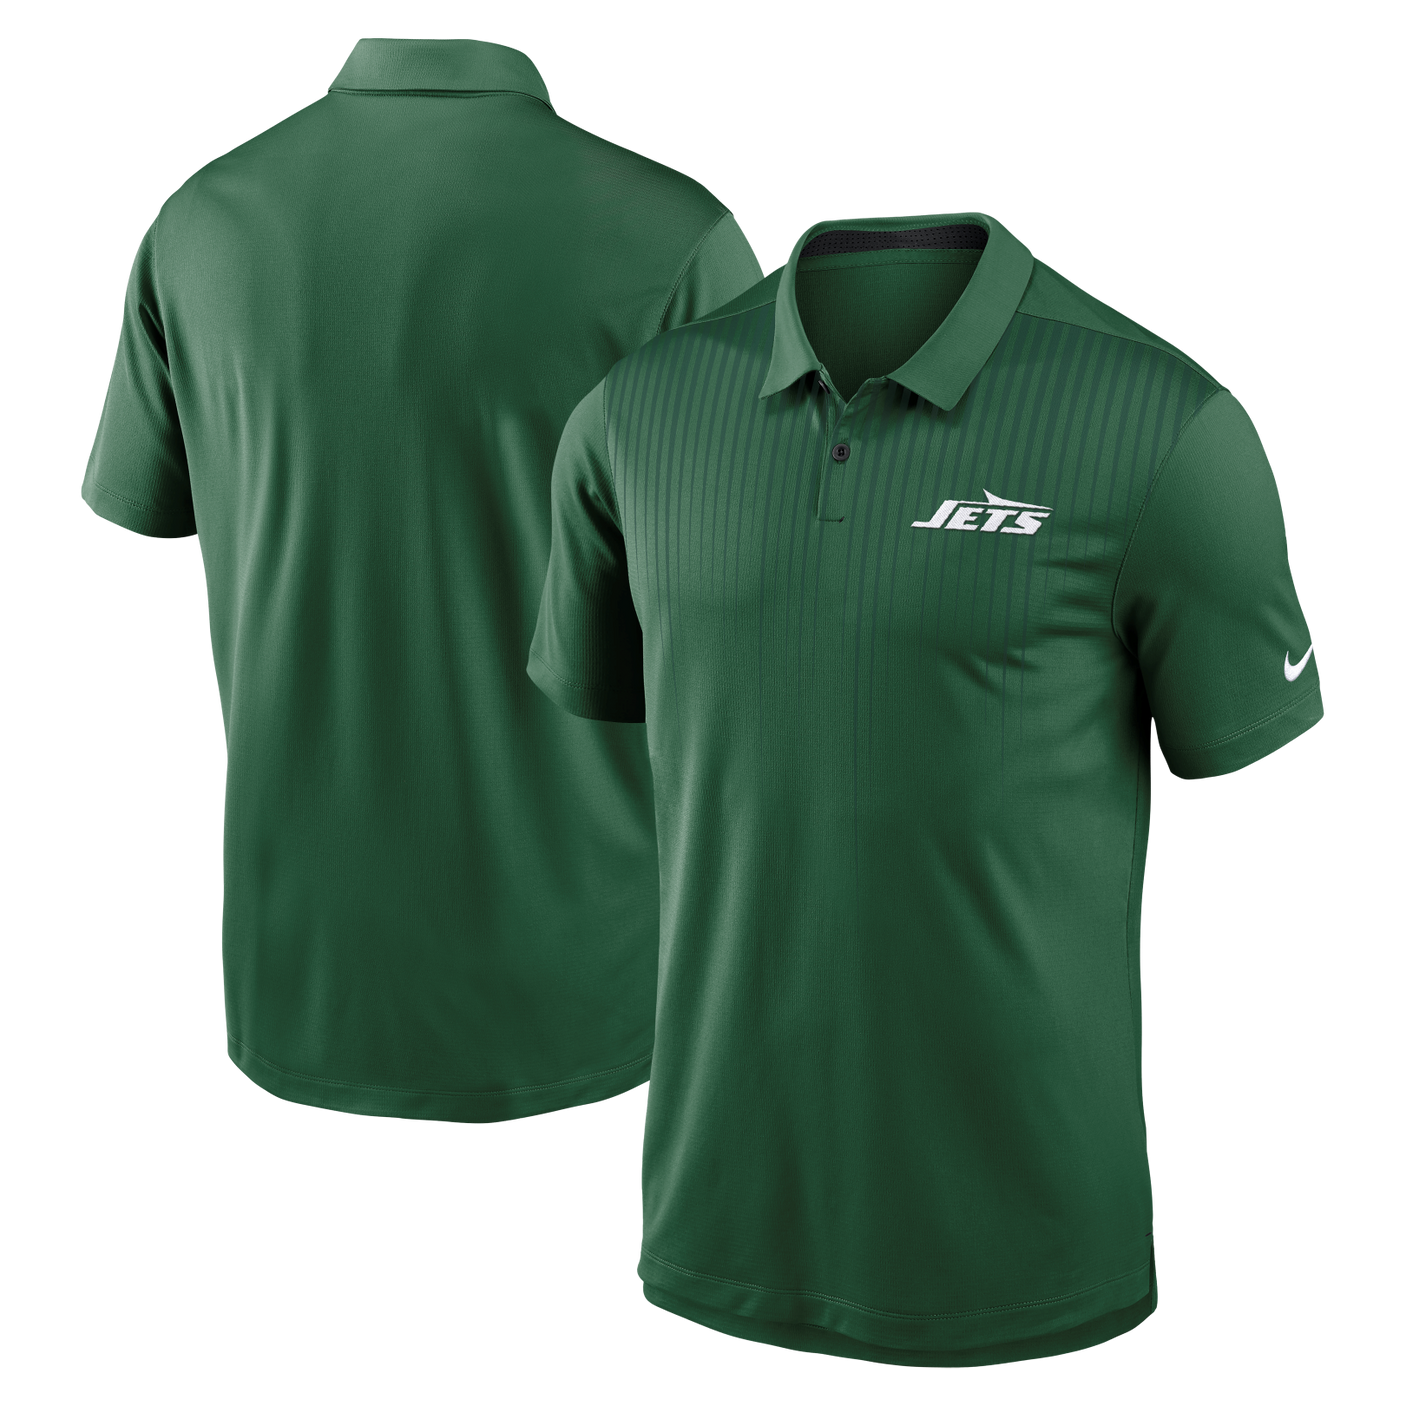 Jets Men's Nike Vapor Polo